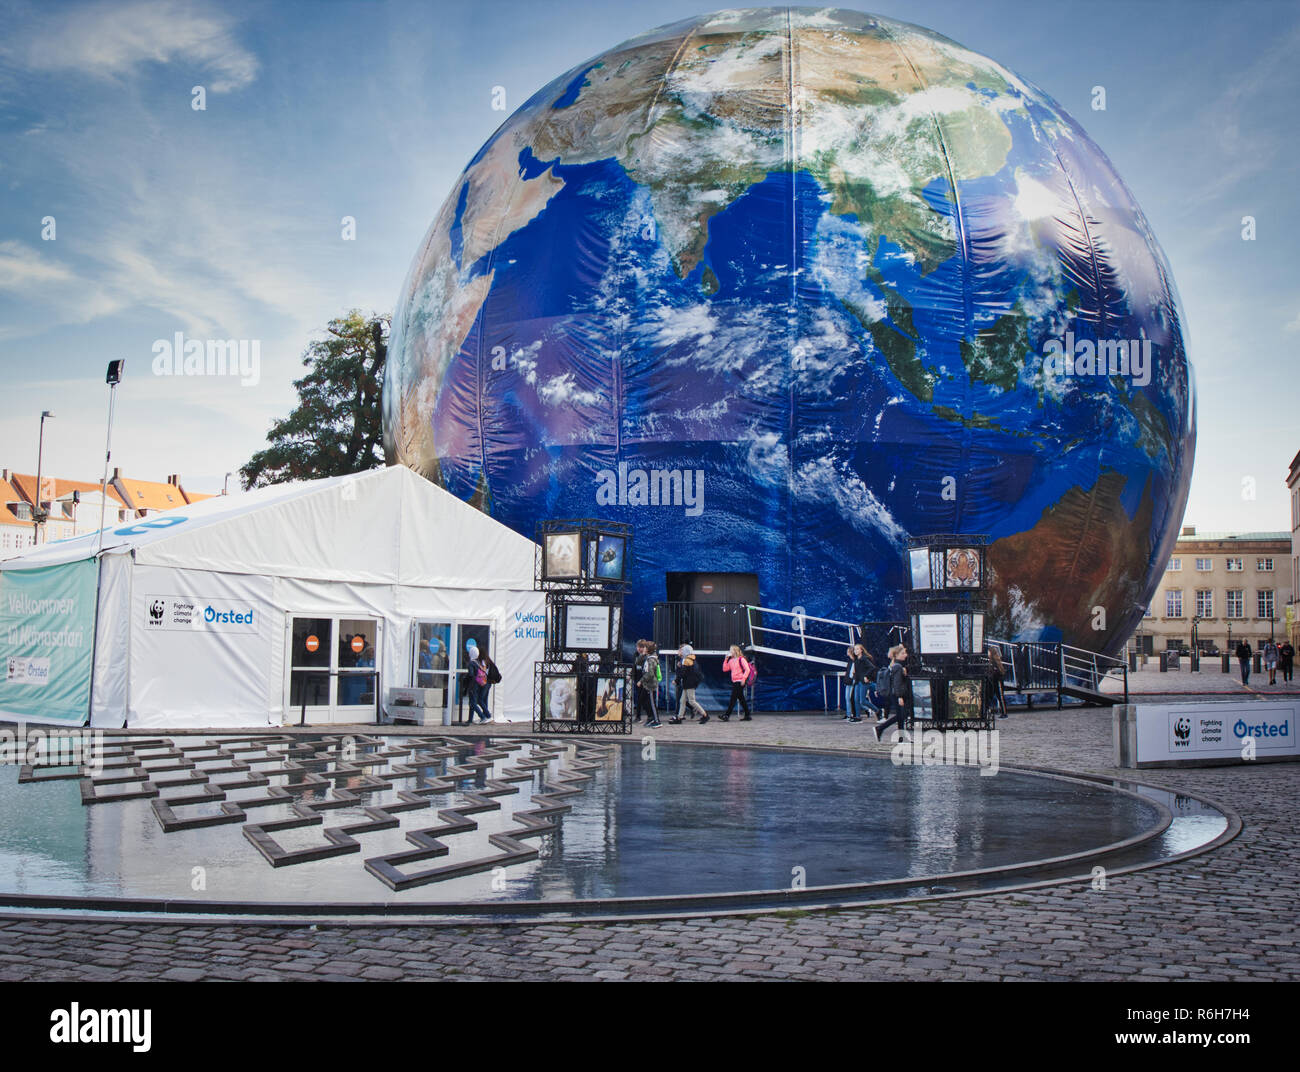 WWF Climate change exhibition inside giant inflatable globe, Thorvaldsens Plads, Copenhagen, Denmark. Stock Photo